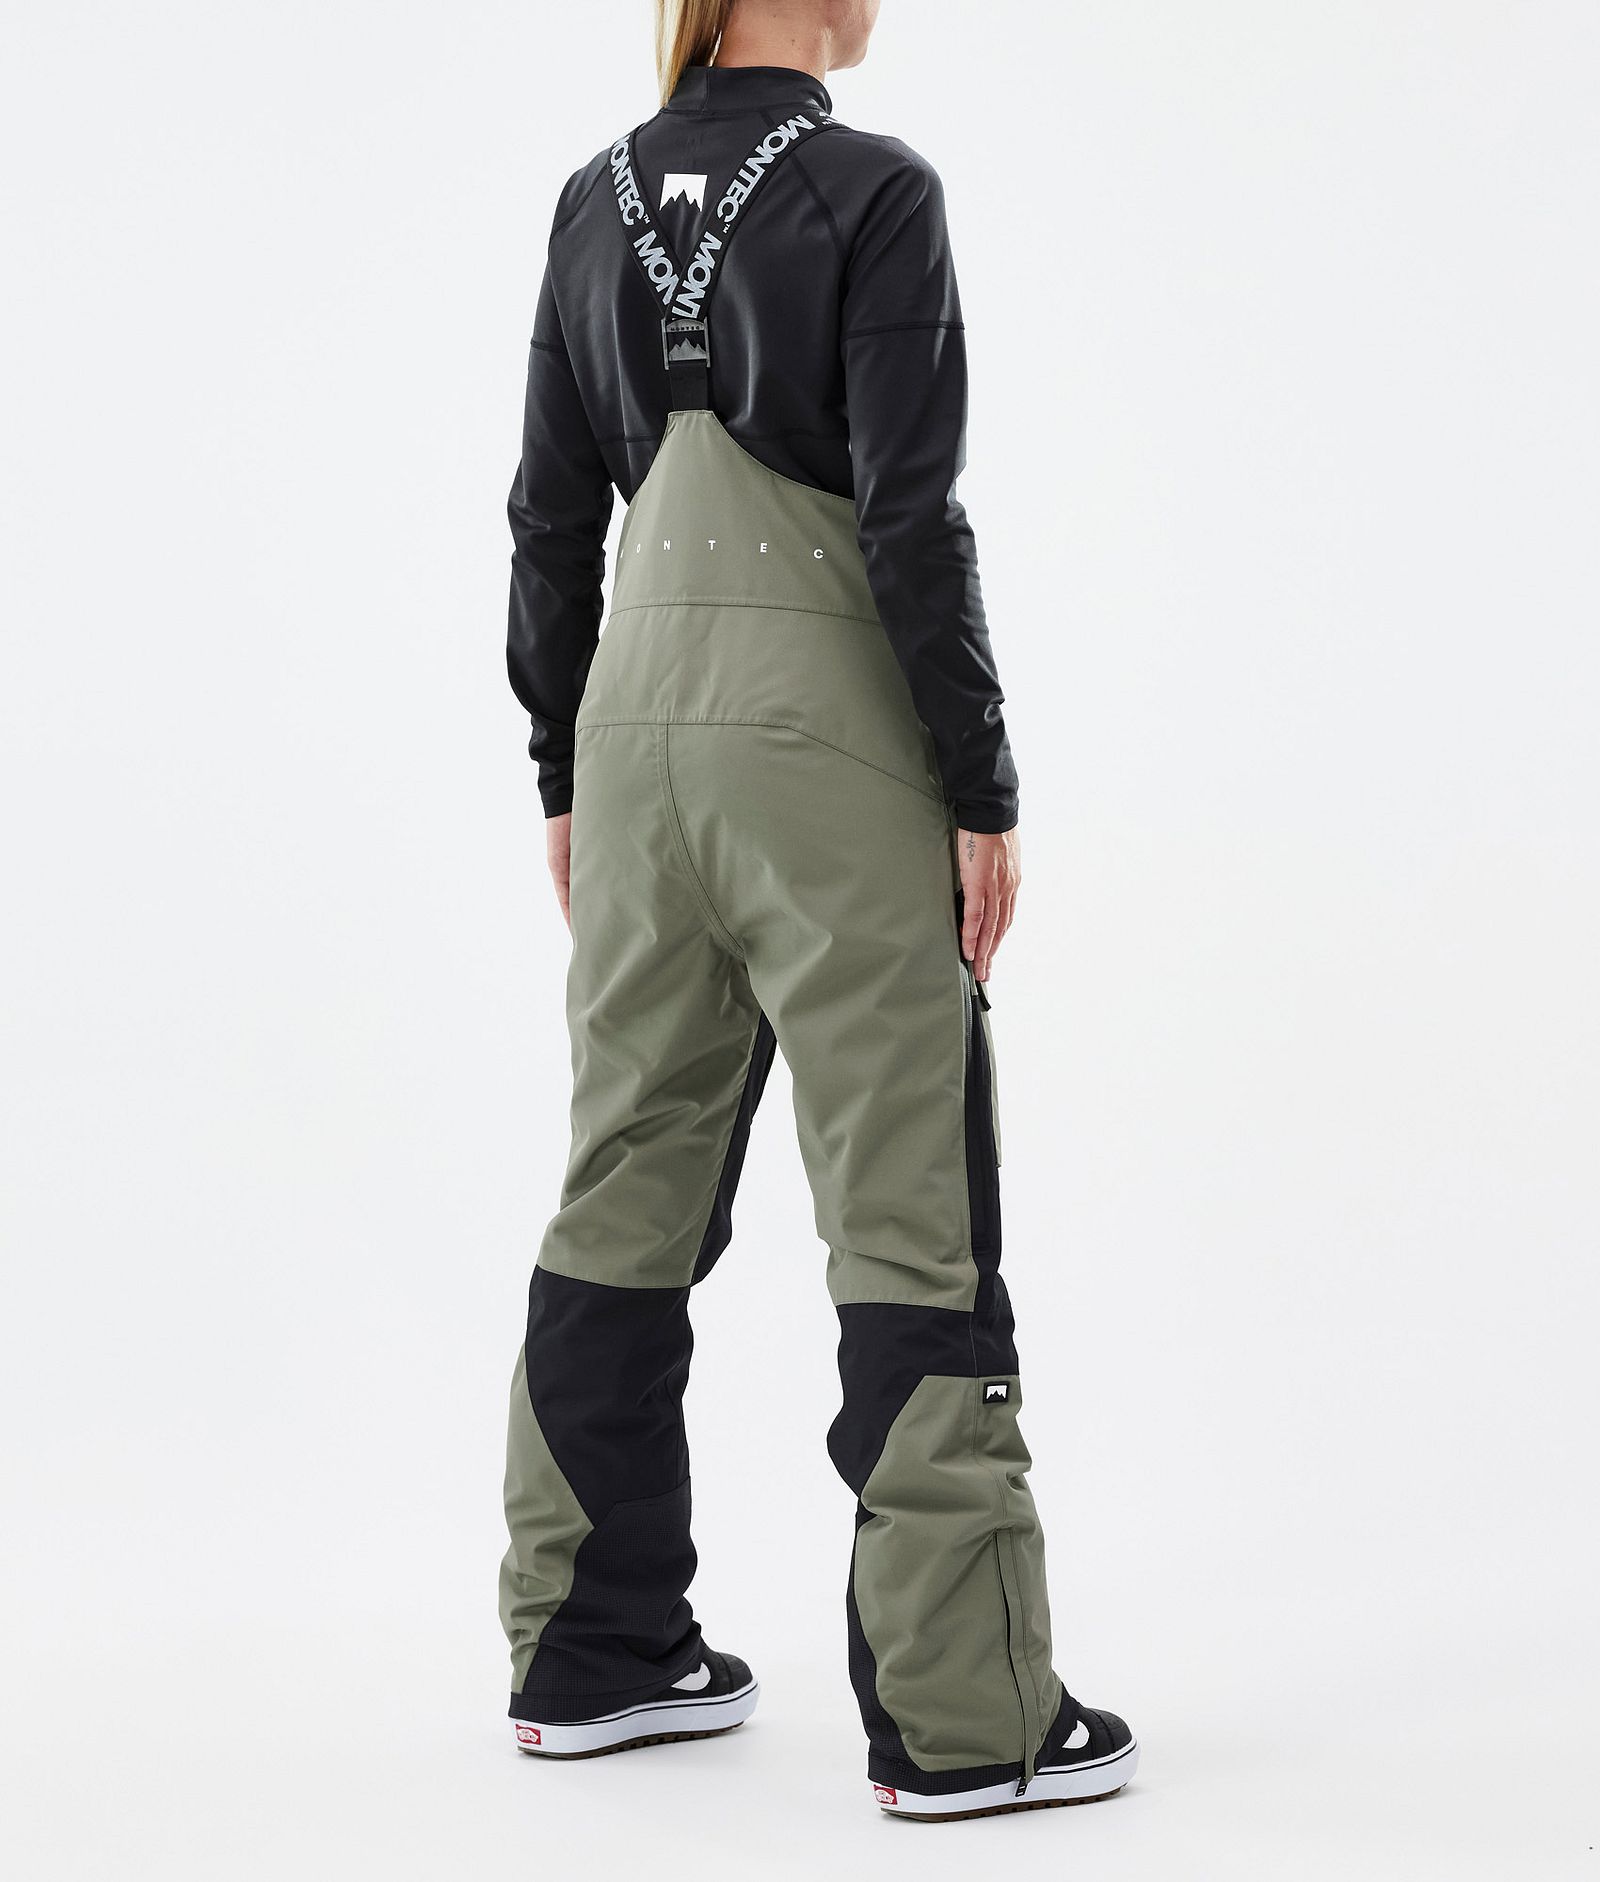 Fawk W Pantalon de Snowboard Femme Greenish/Black